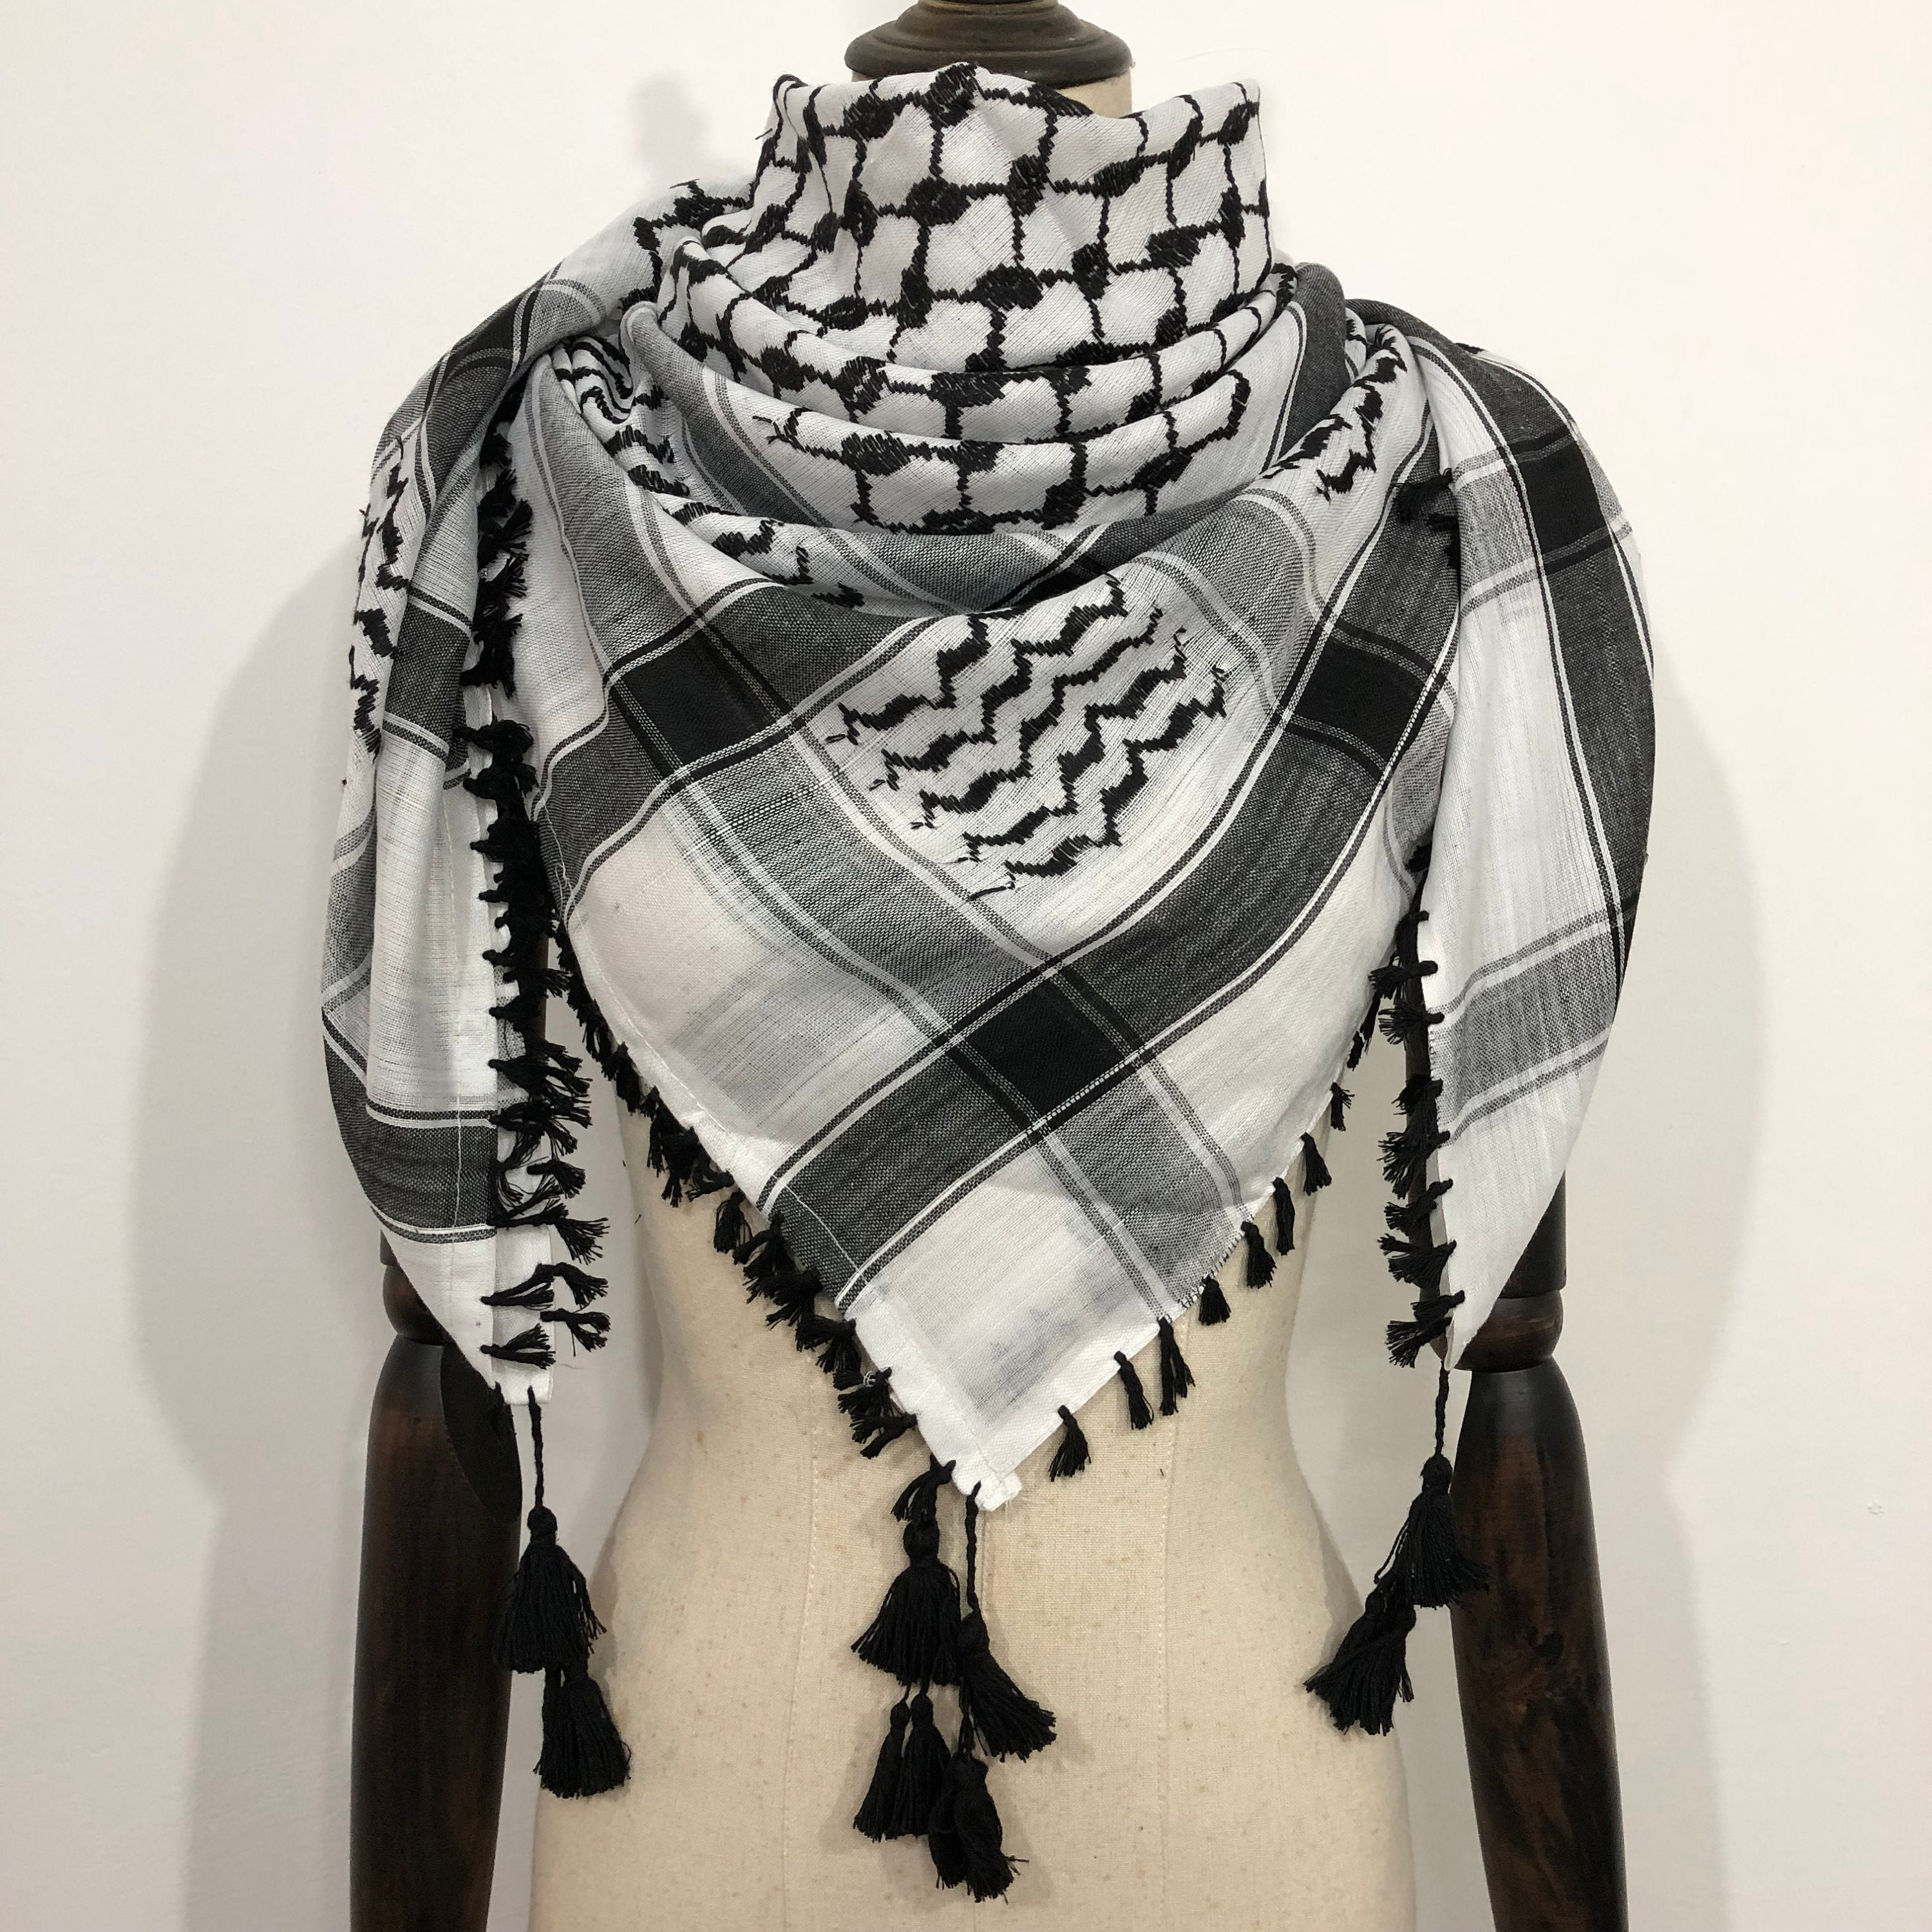 white shemagh yashmagh Arab square scarf men Palestinian Keffiyeh